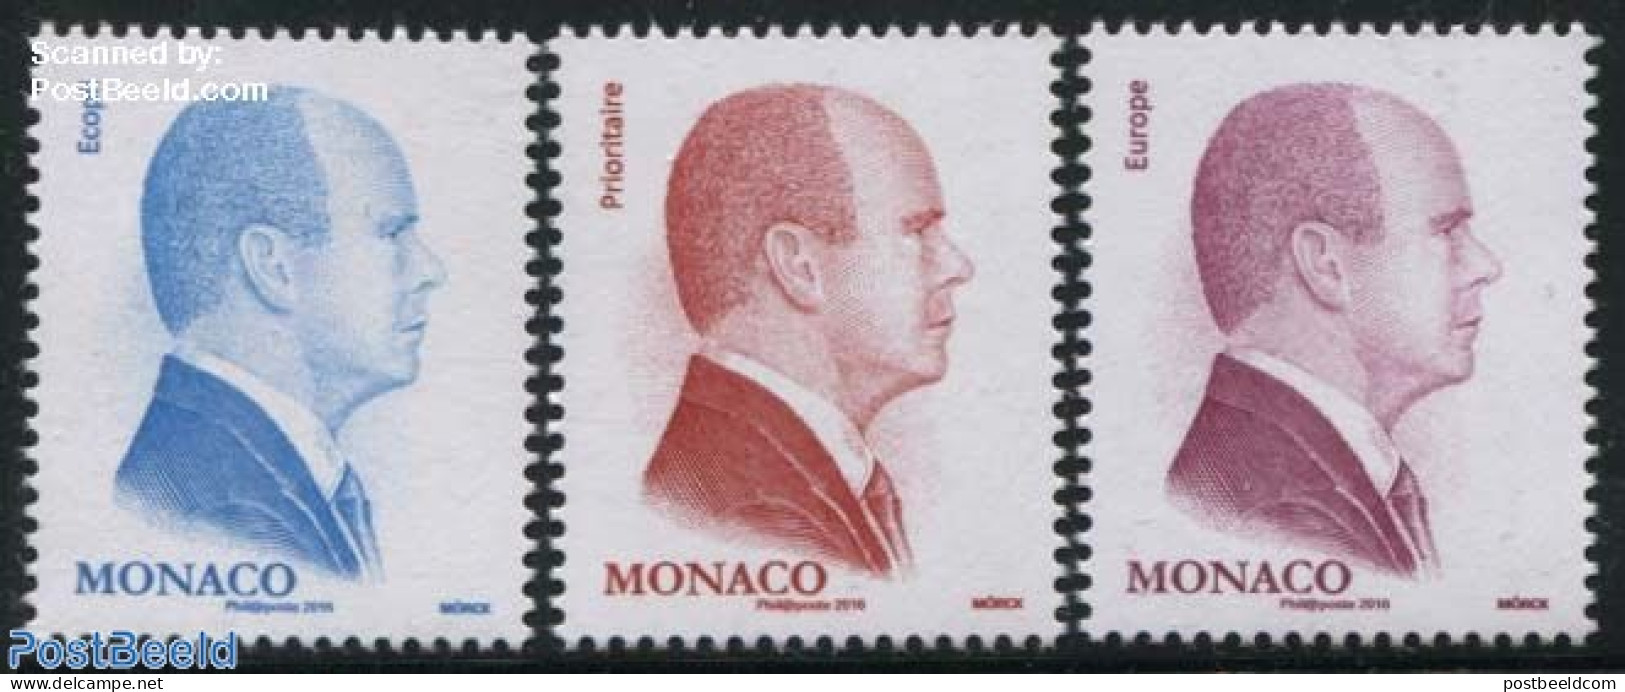 Monaco 2016 Definitives 3v (with Year 2016), Mint NH - Ongebruikt